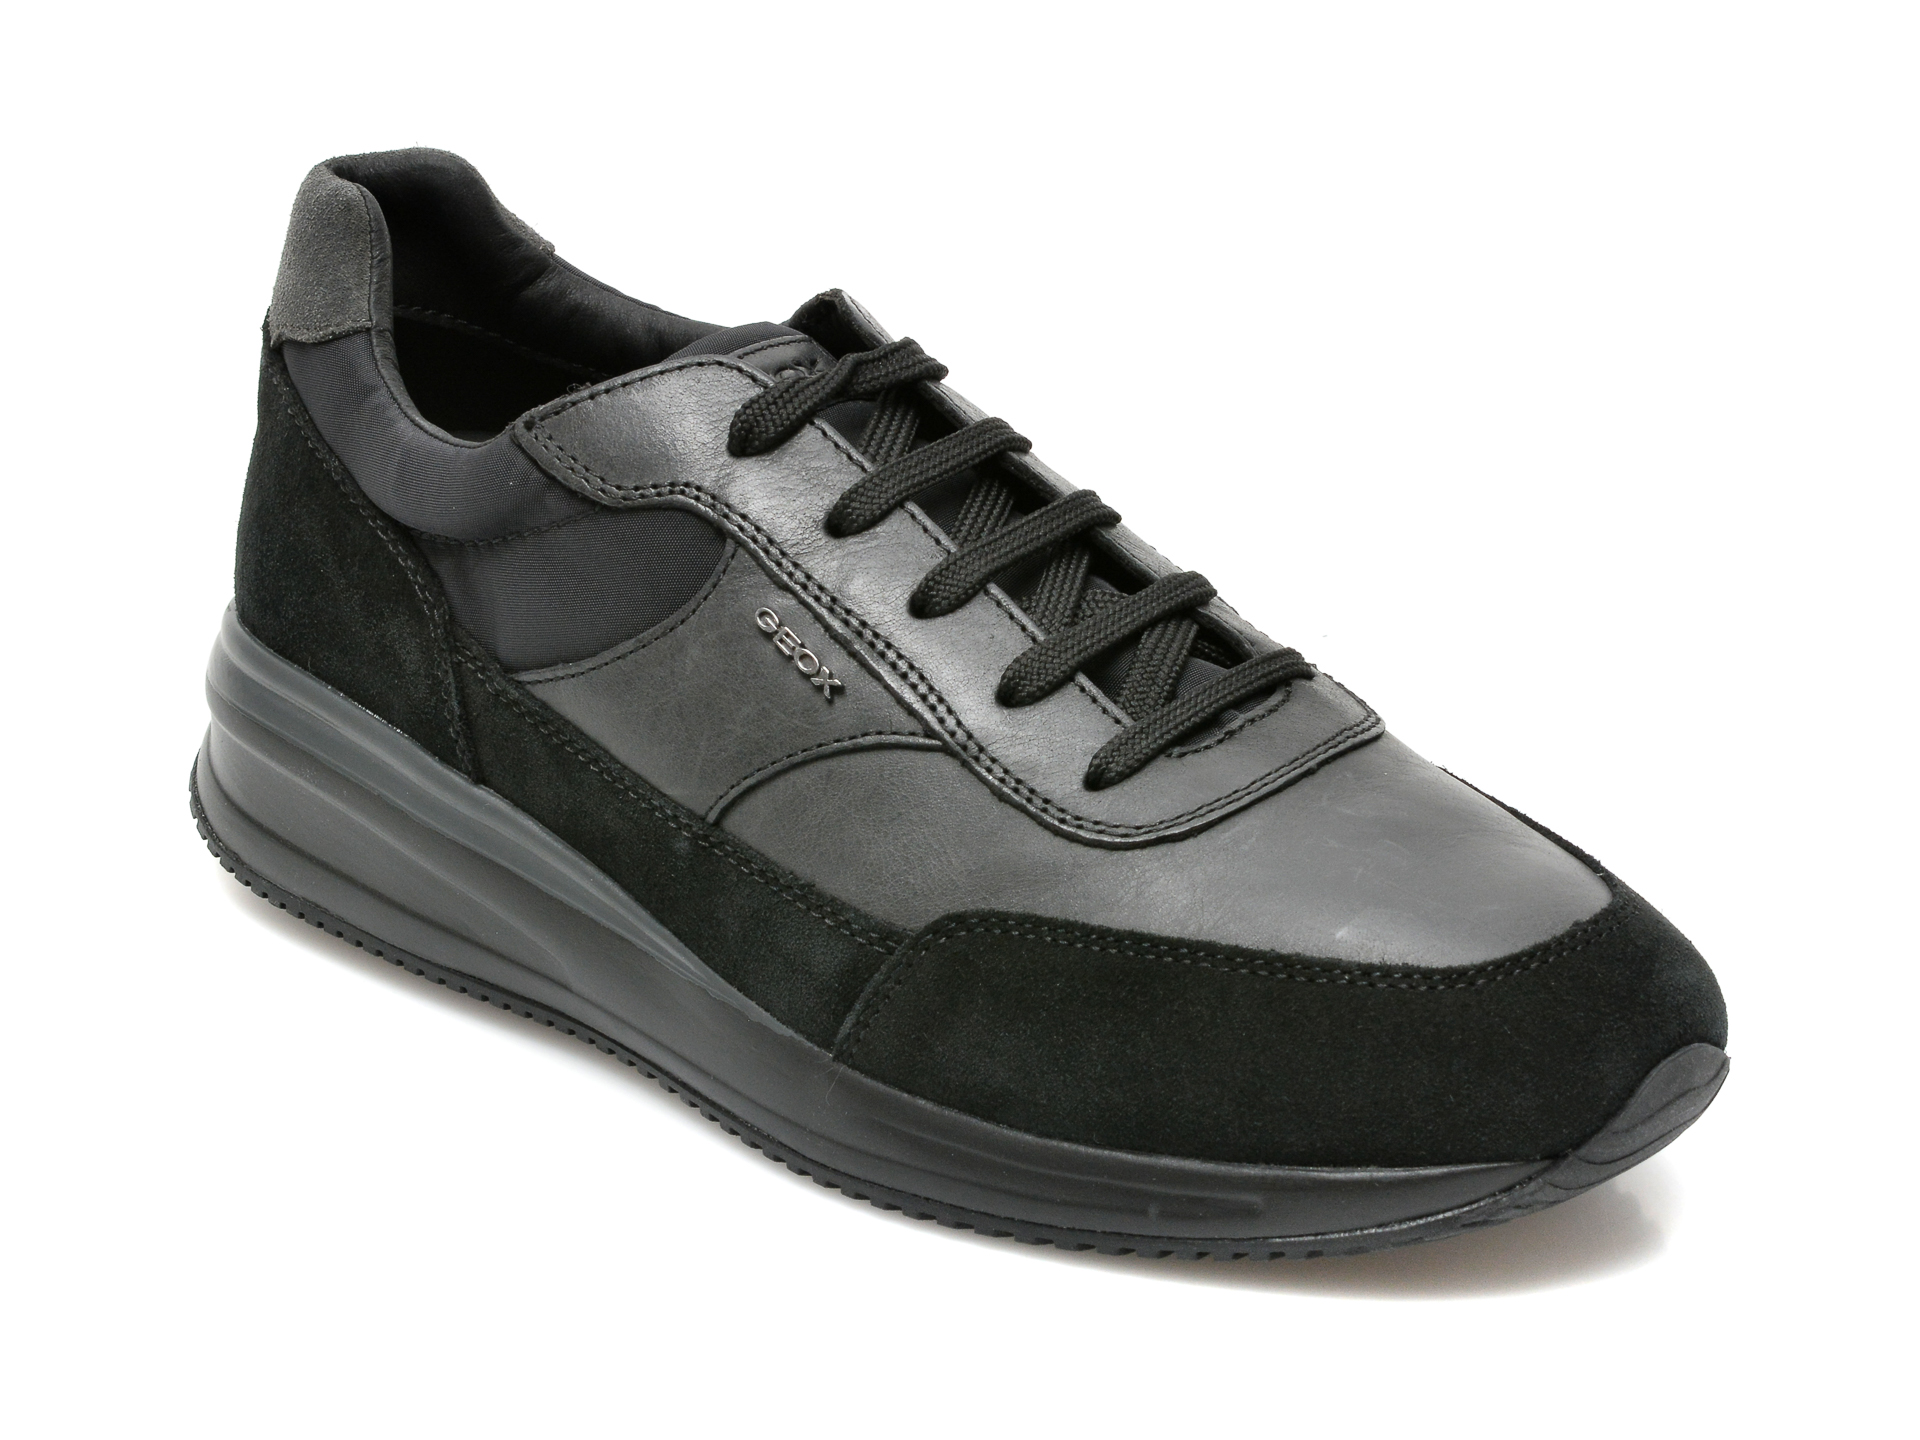 Pantofi GEOX negri, U150GA, din piele naturala Geox imagine 2022 13clothing.ro